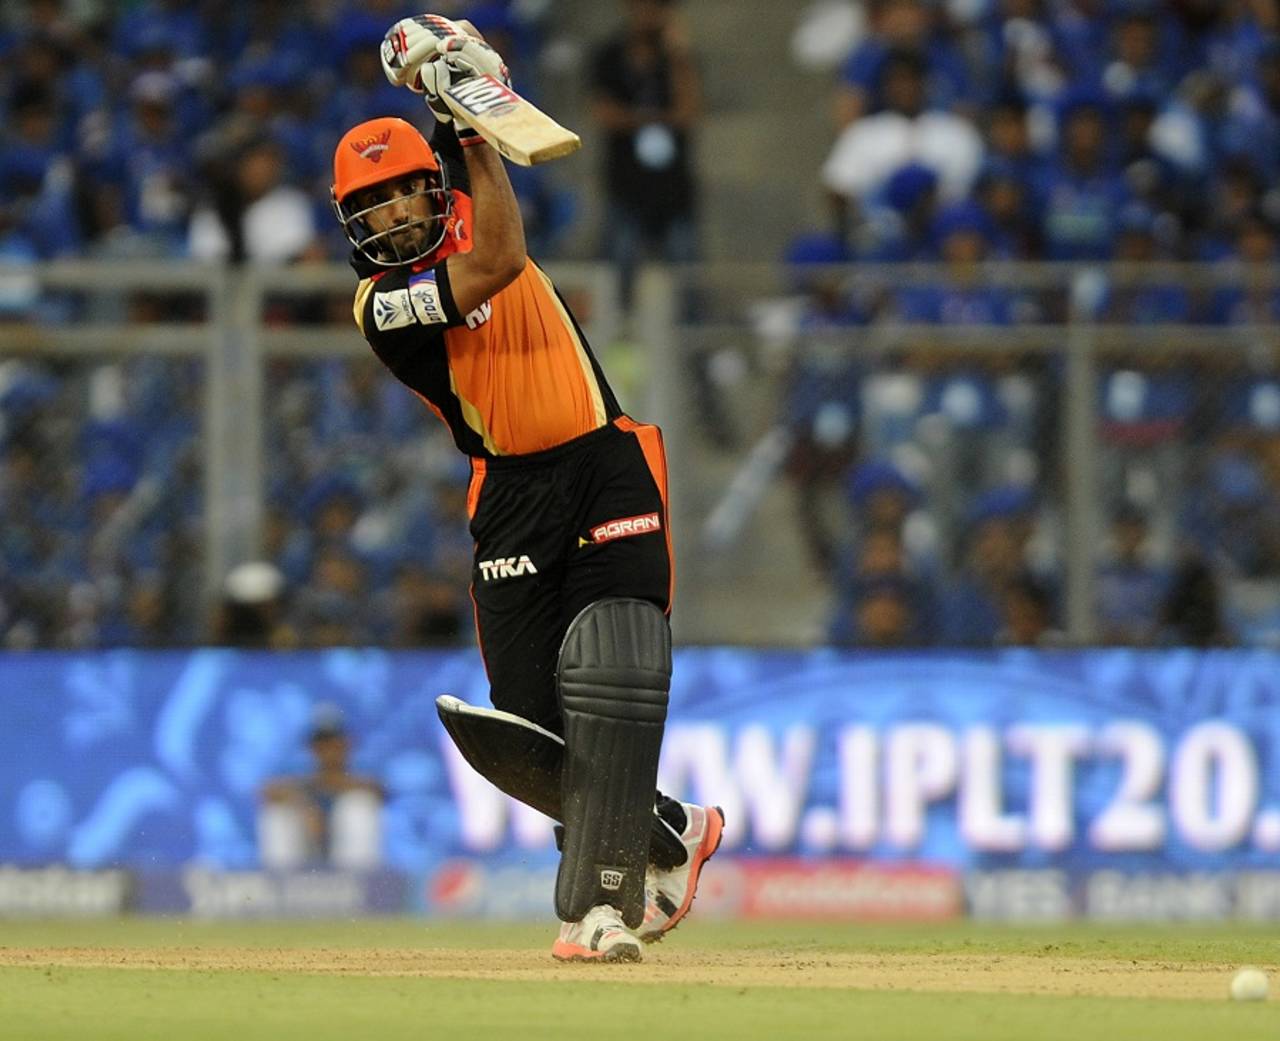 Ravi Bopara drills a drive, Mumbai Indians v Sunrisers Hyderabad, IPL 2015, Mumbai, April 25, 2015